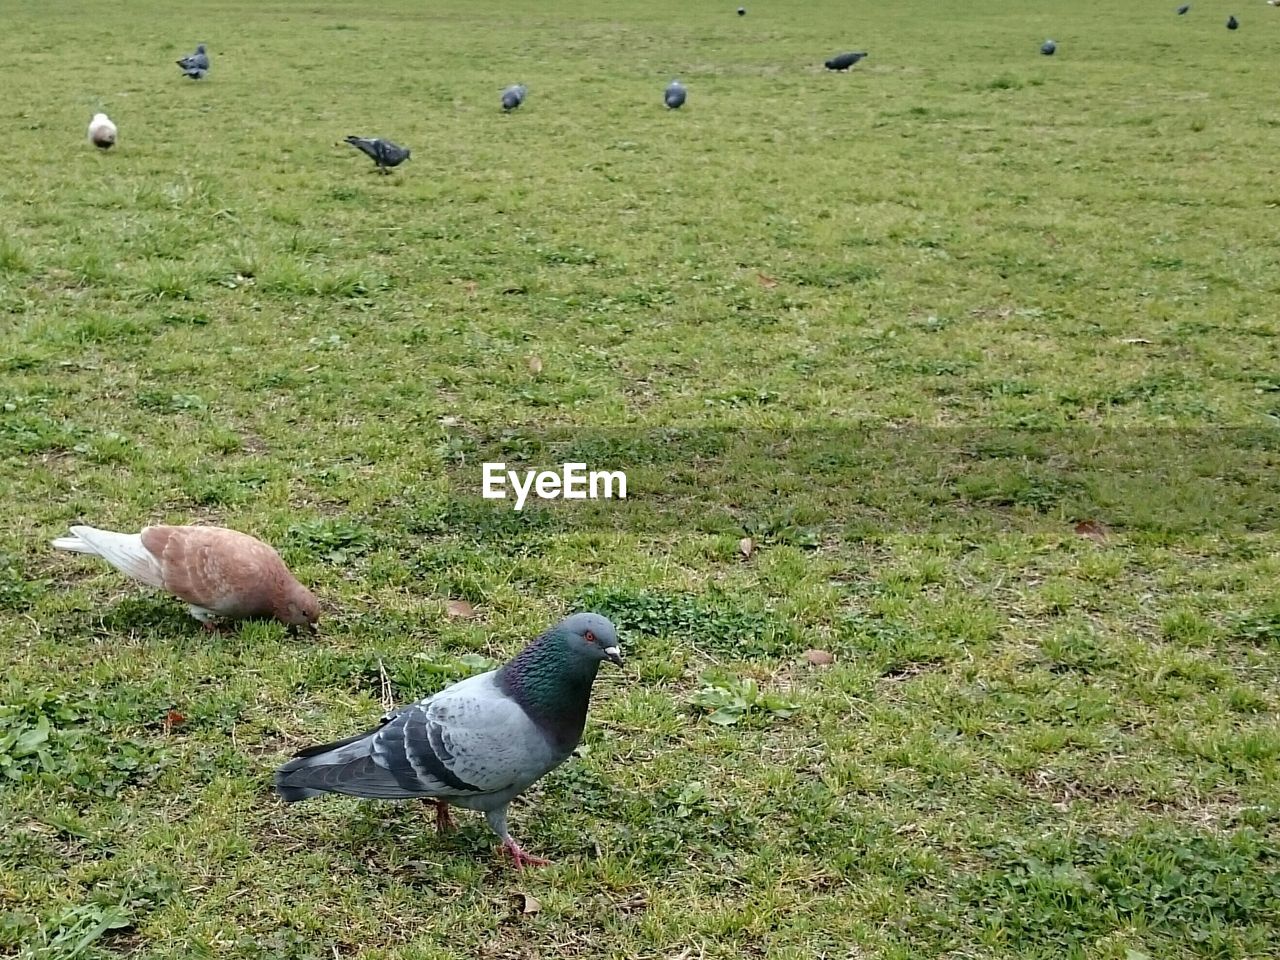 Pigeons perching on grassy field